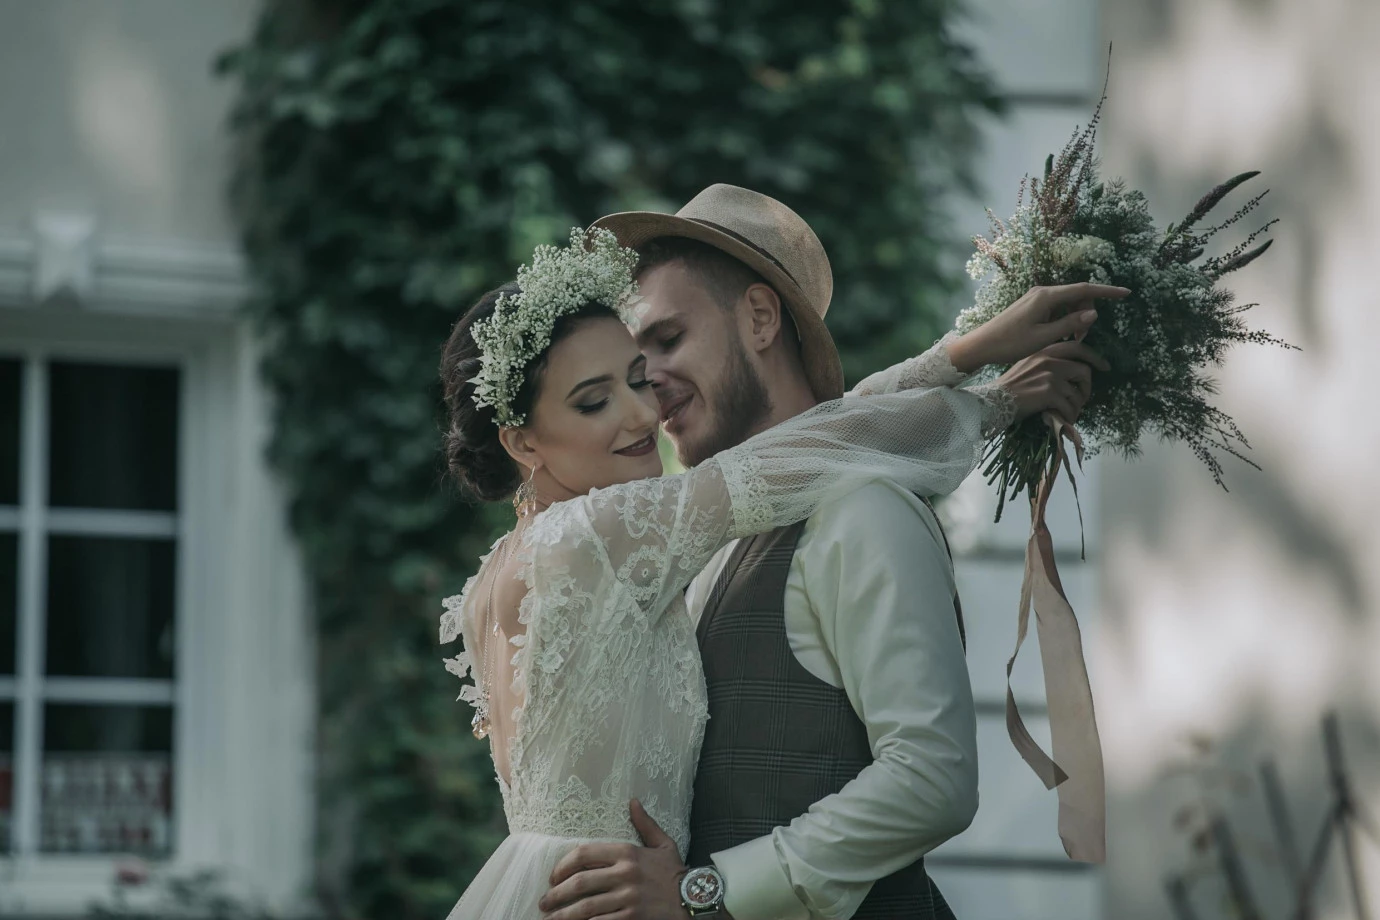 zdjęcia krakow fotograf anna-studio portfolio zdjecia slubne inspiracje wesele plener slubny sesja slubna